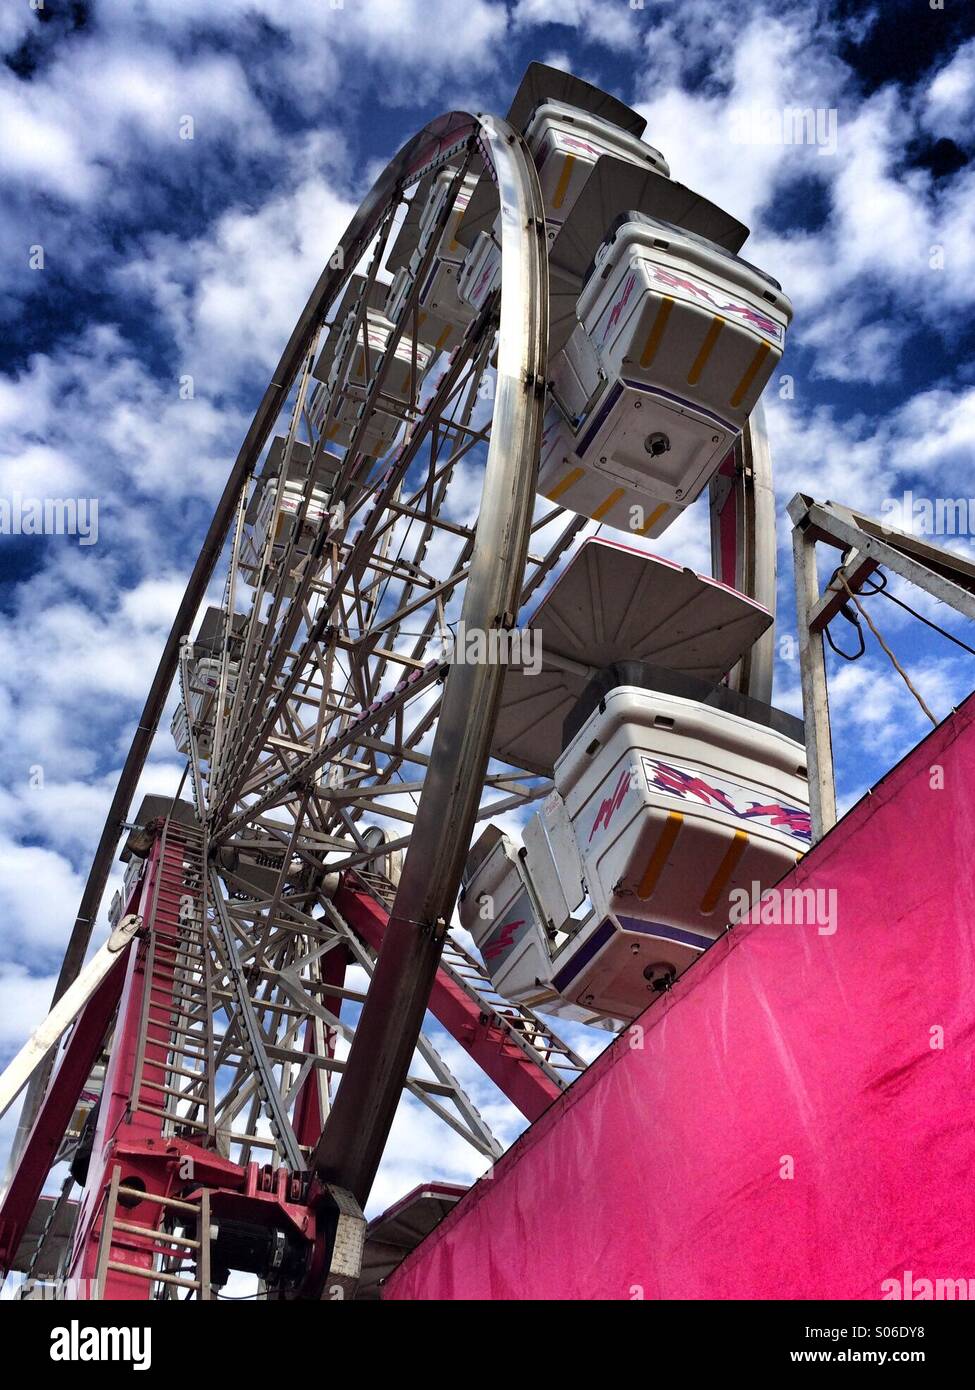 A large Ferris wheel against a blue cloudy sky at the fair Stock Photo